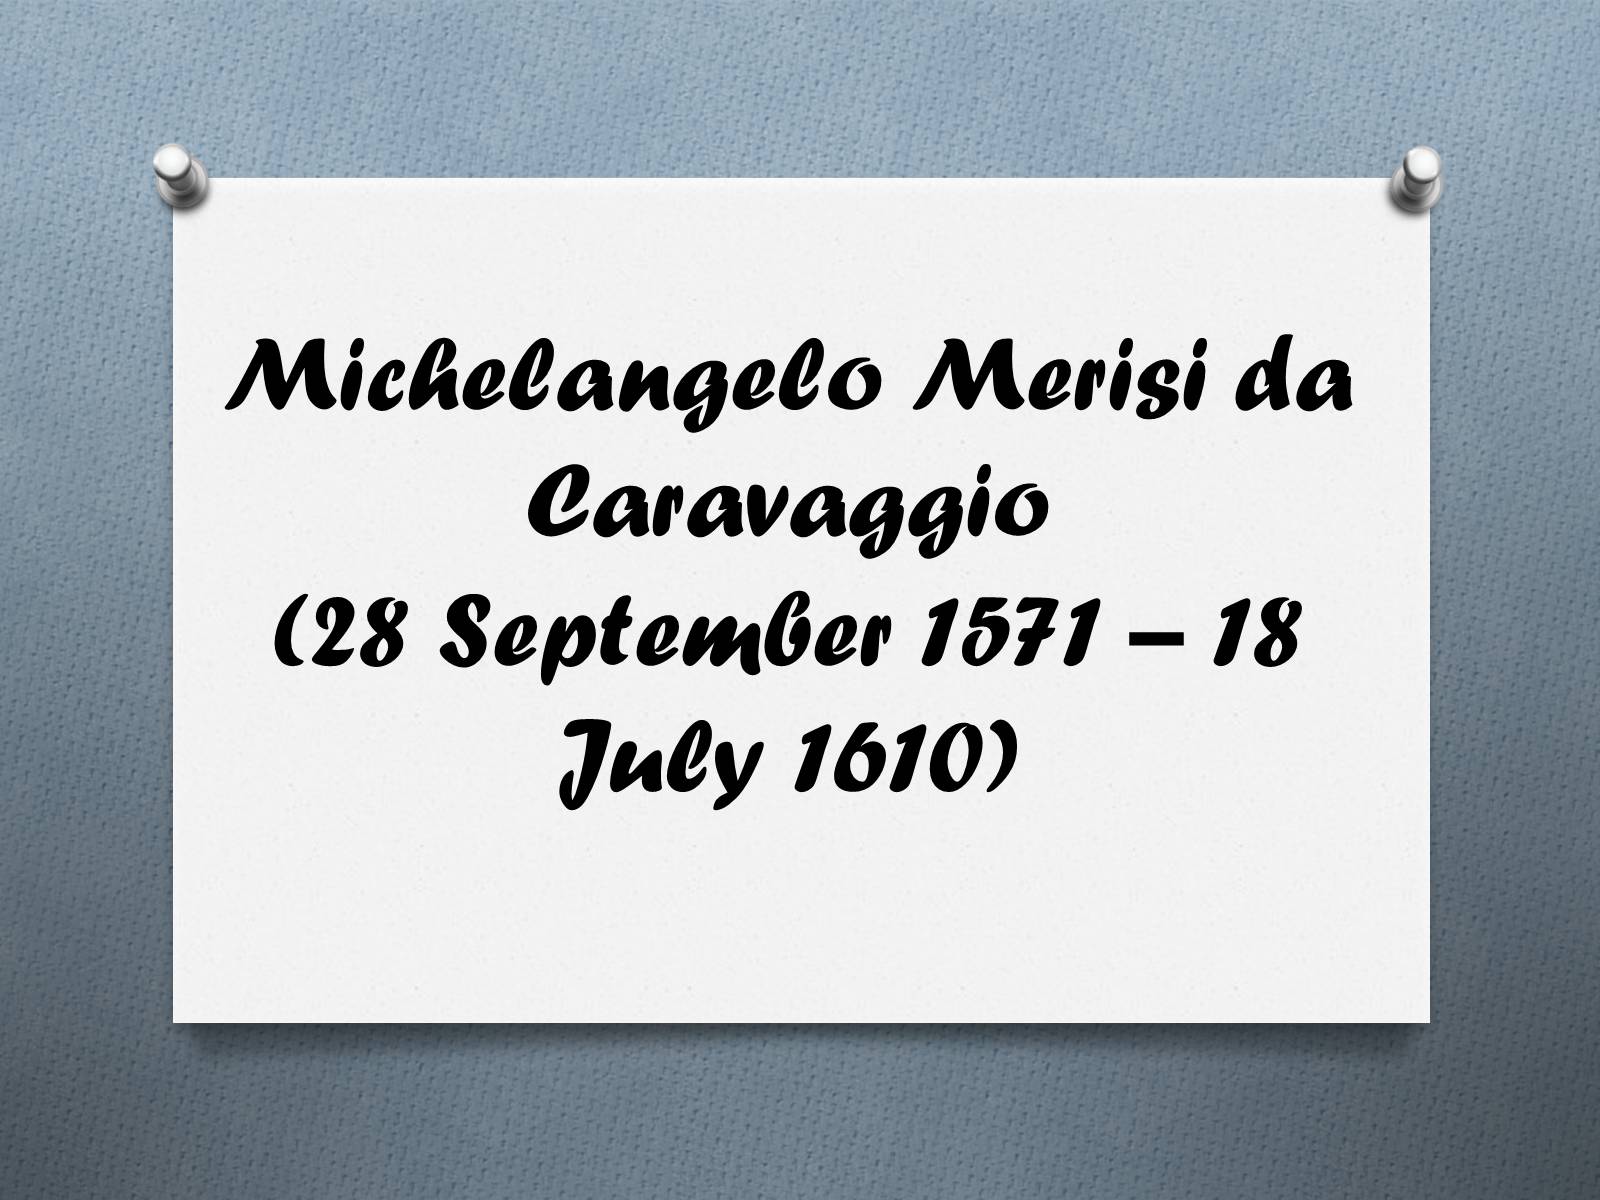 Презентація на тему «Michelangelo Merisi da Caravaggio» - Слайд #1